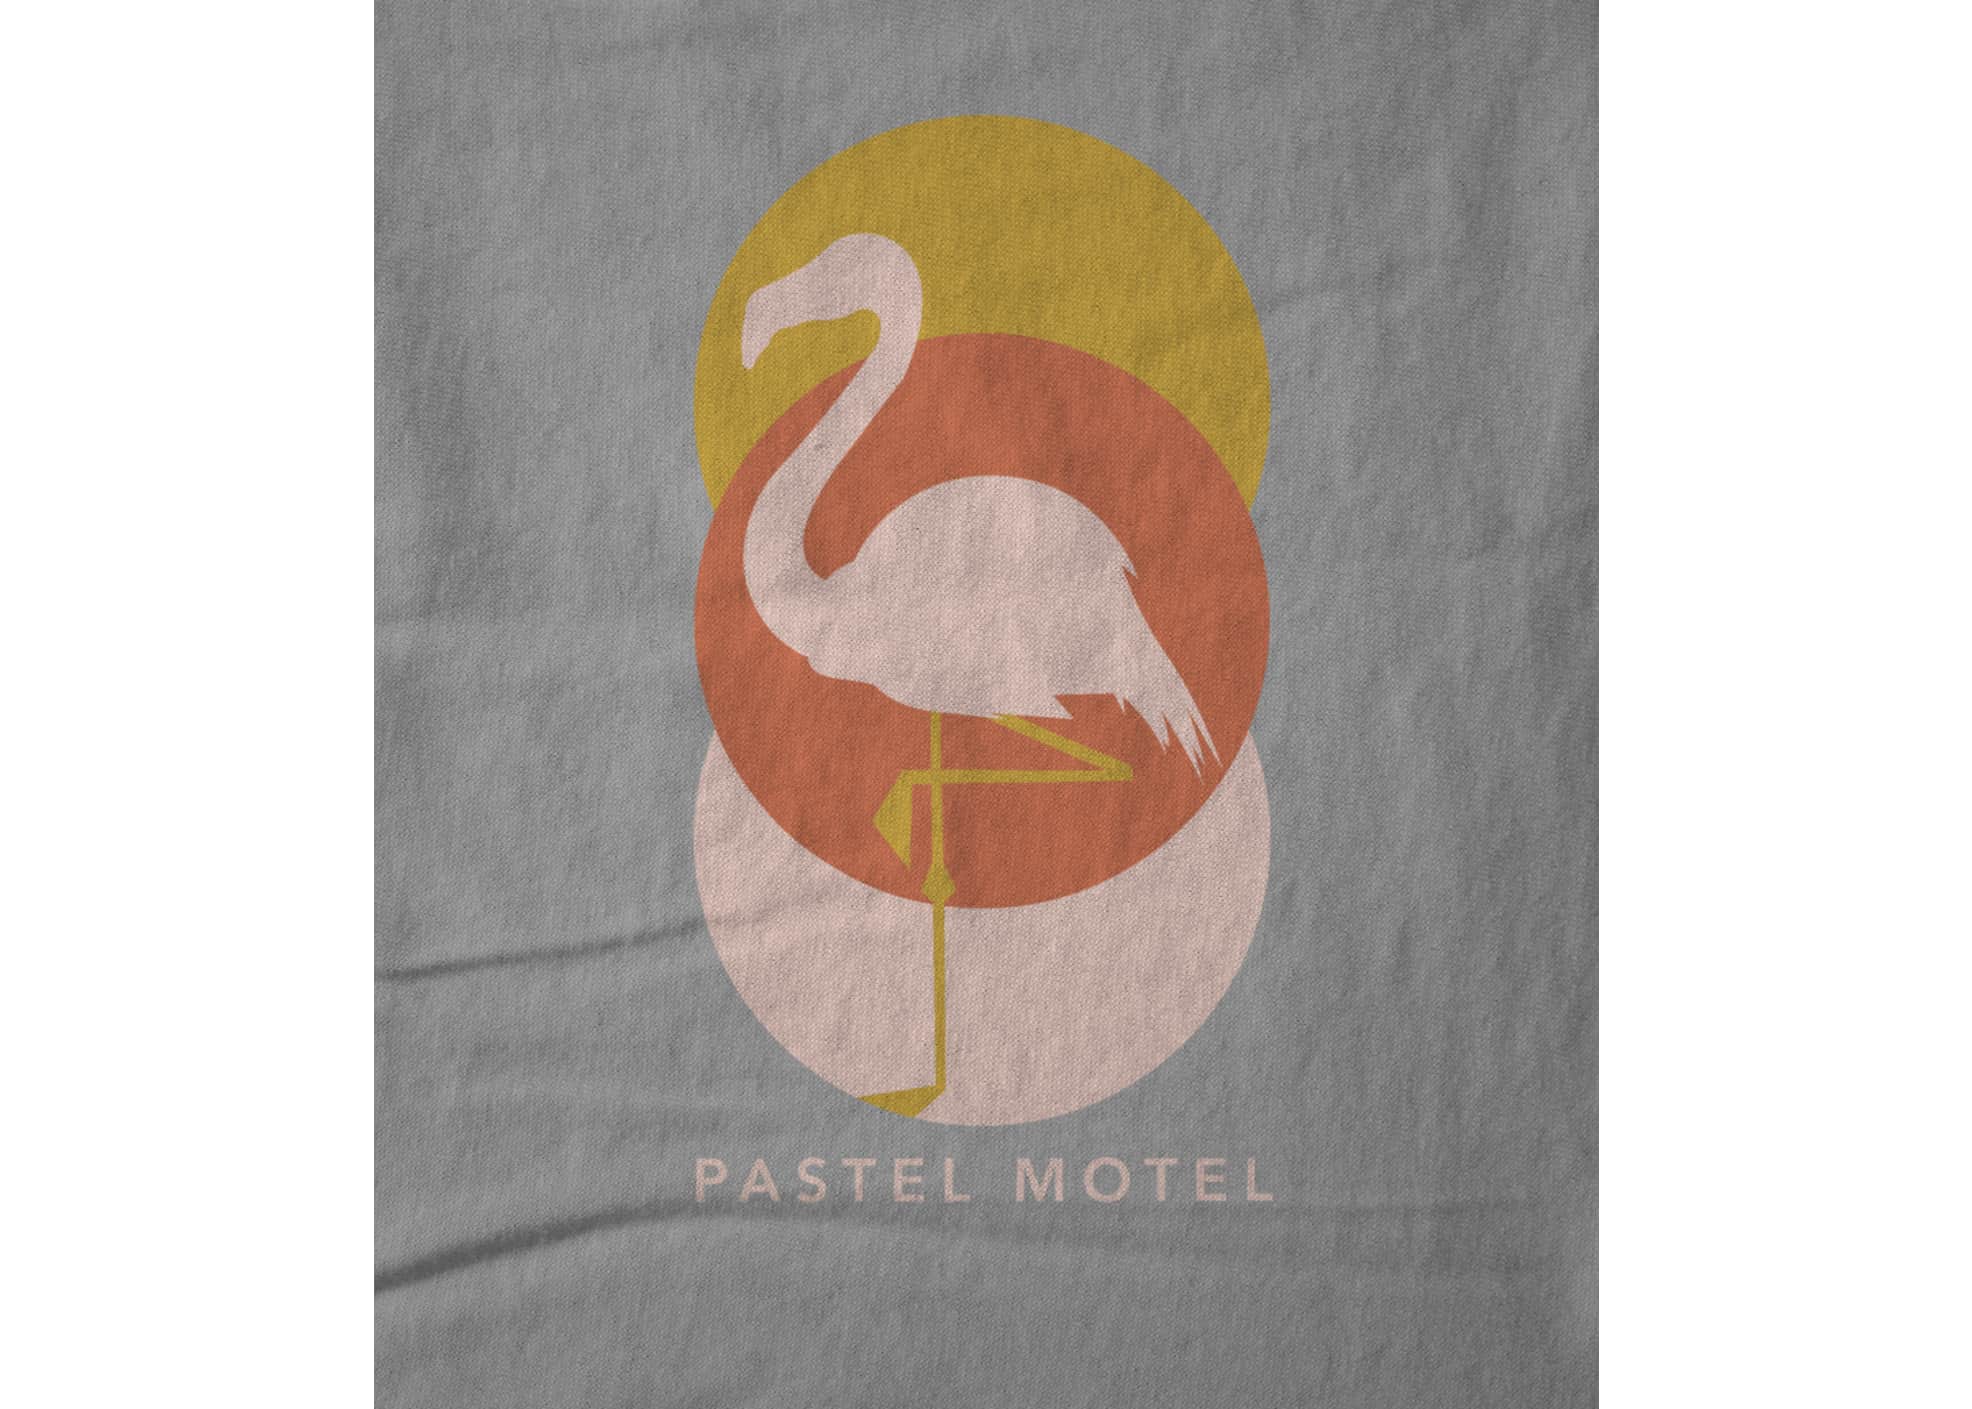 Pastel motel flamingo 1516315246